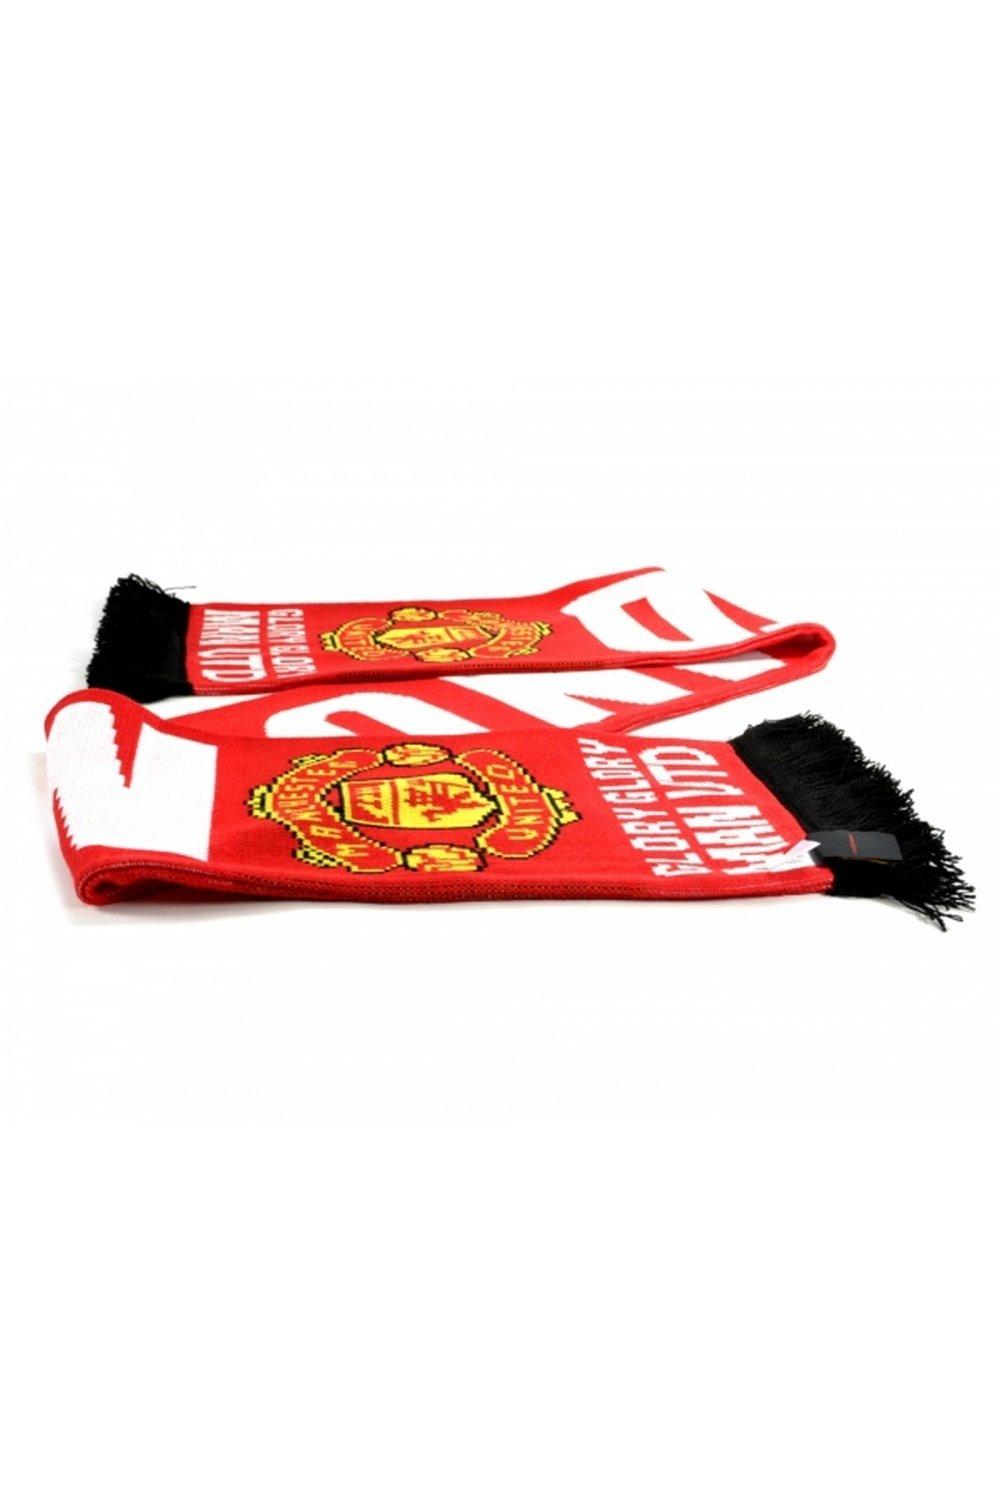 Официальный шарф Football Glory Glory Manchester United FC, мультиколор